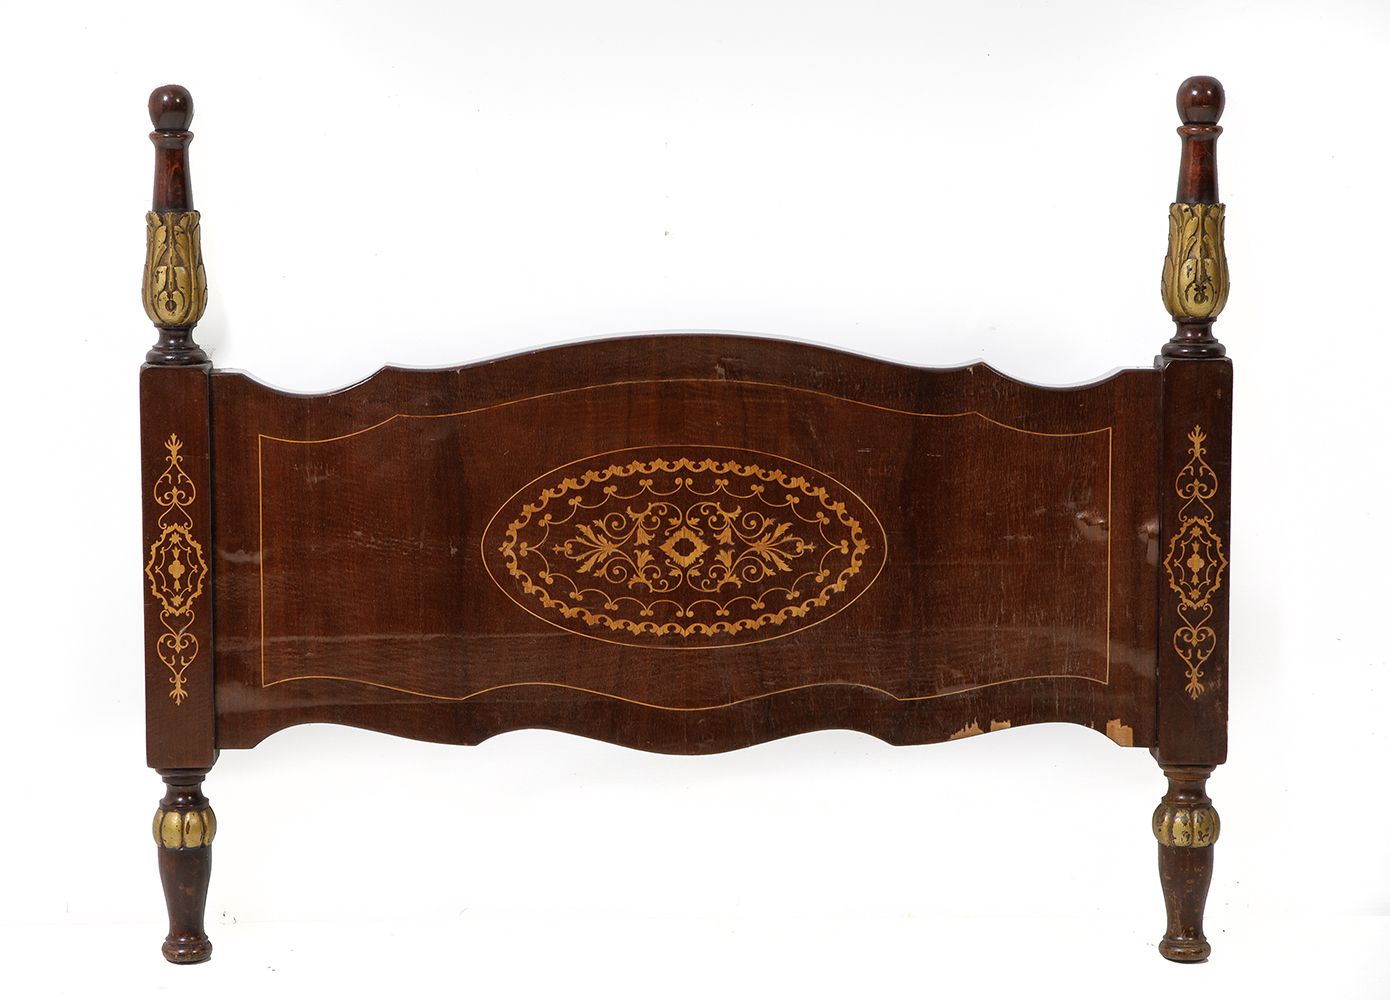 Marquetry wood footboar 19世纪红木清漆木质脚板。镶嵌的植物储备. 93 x 113 cm.